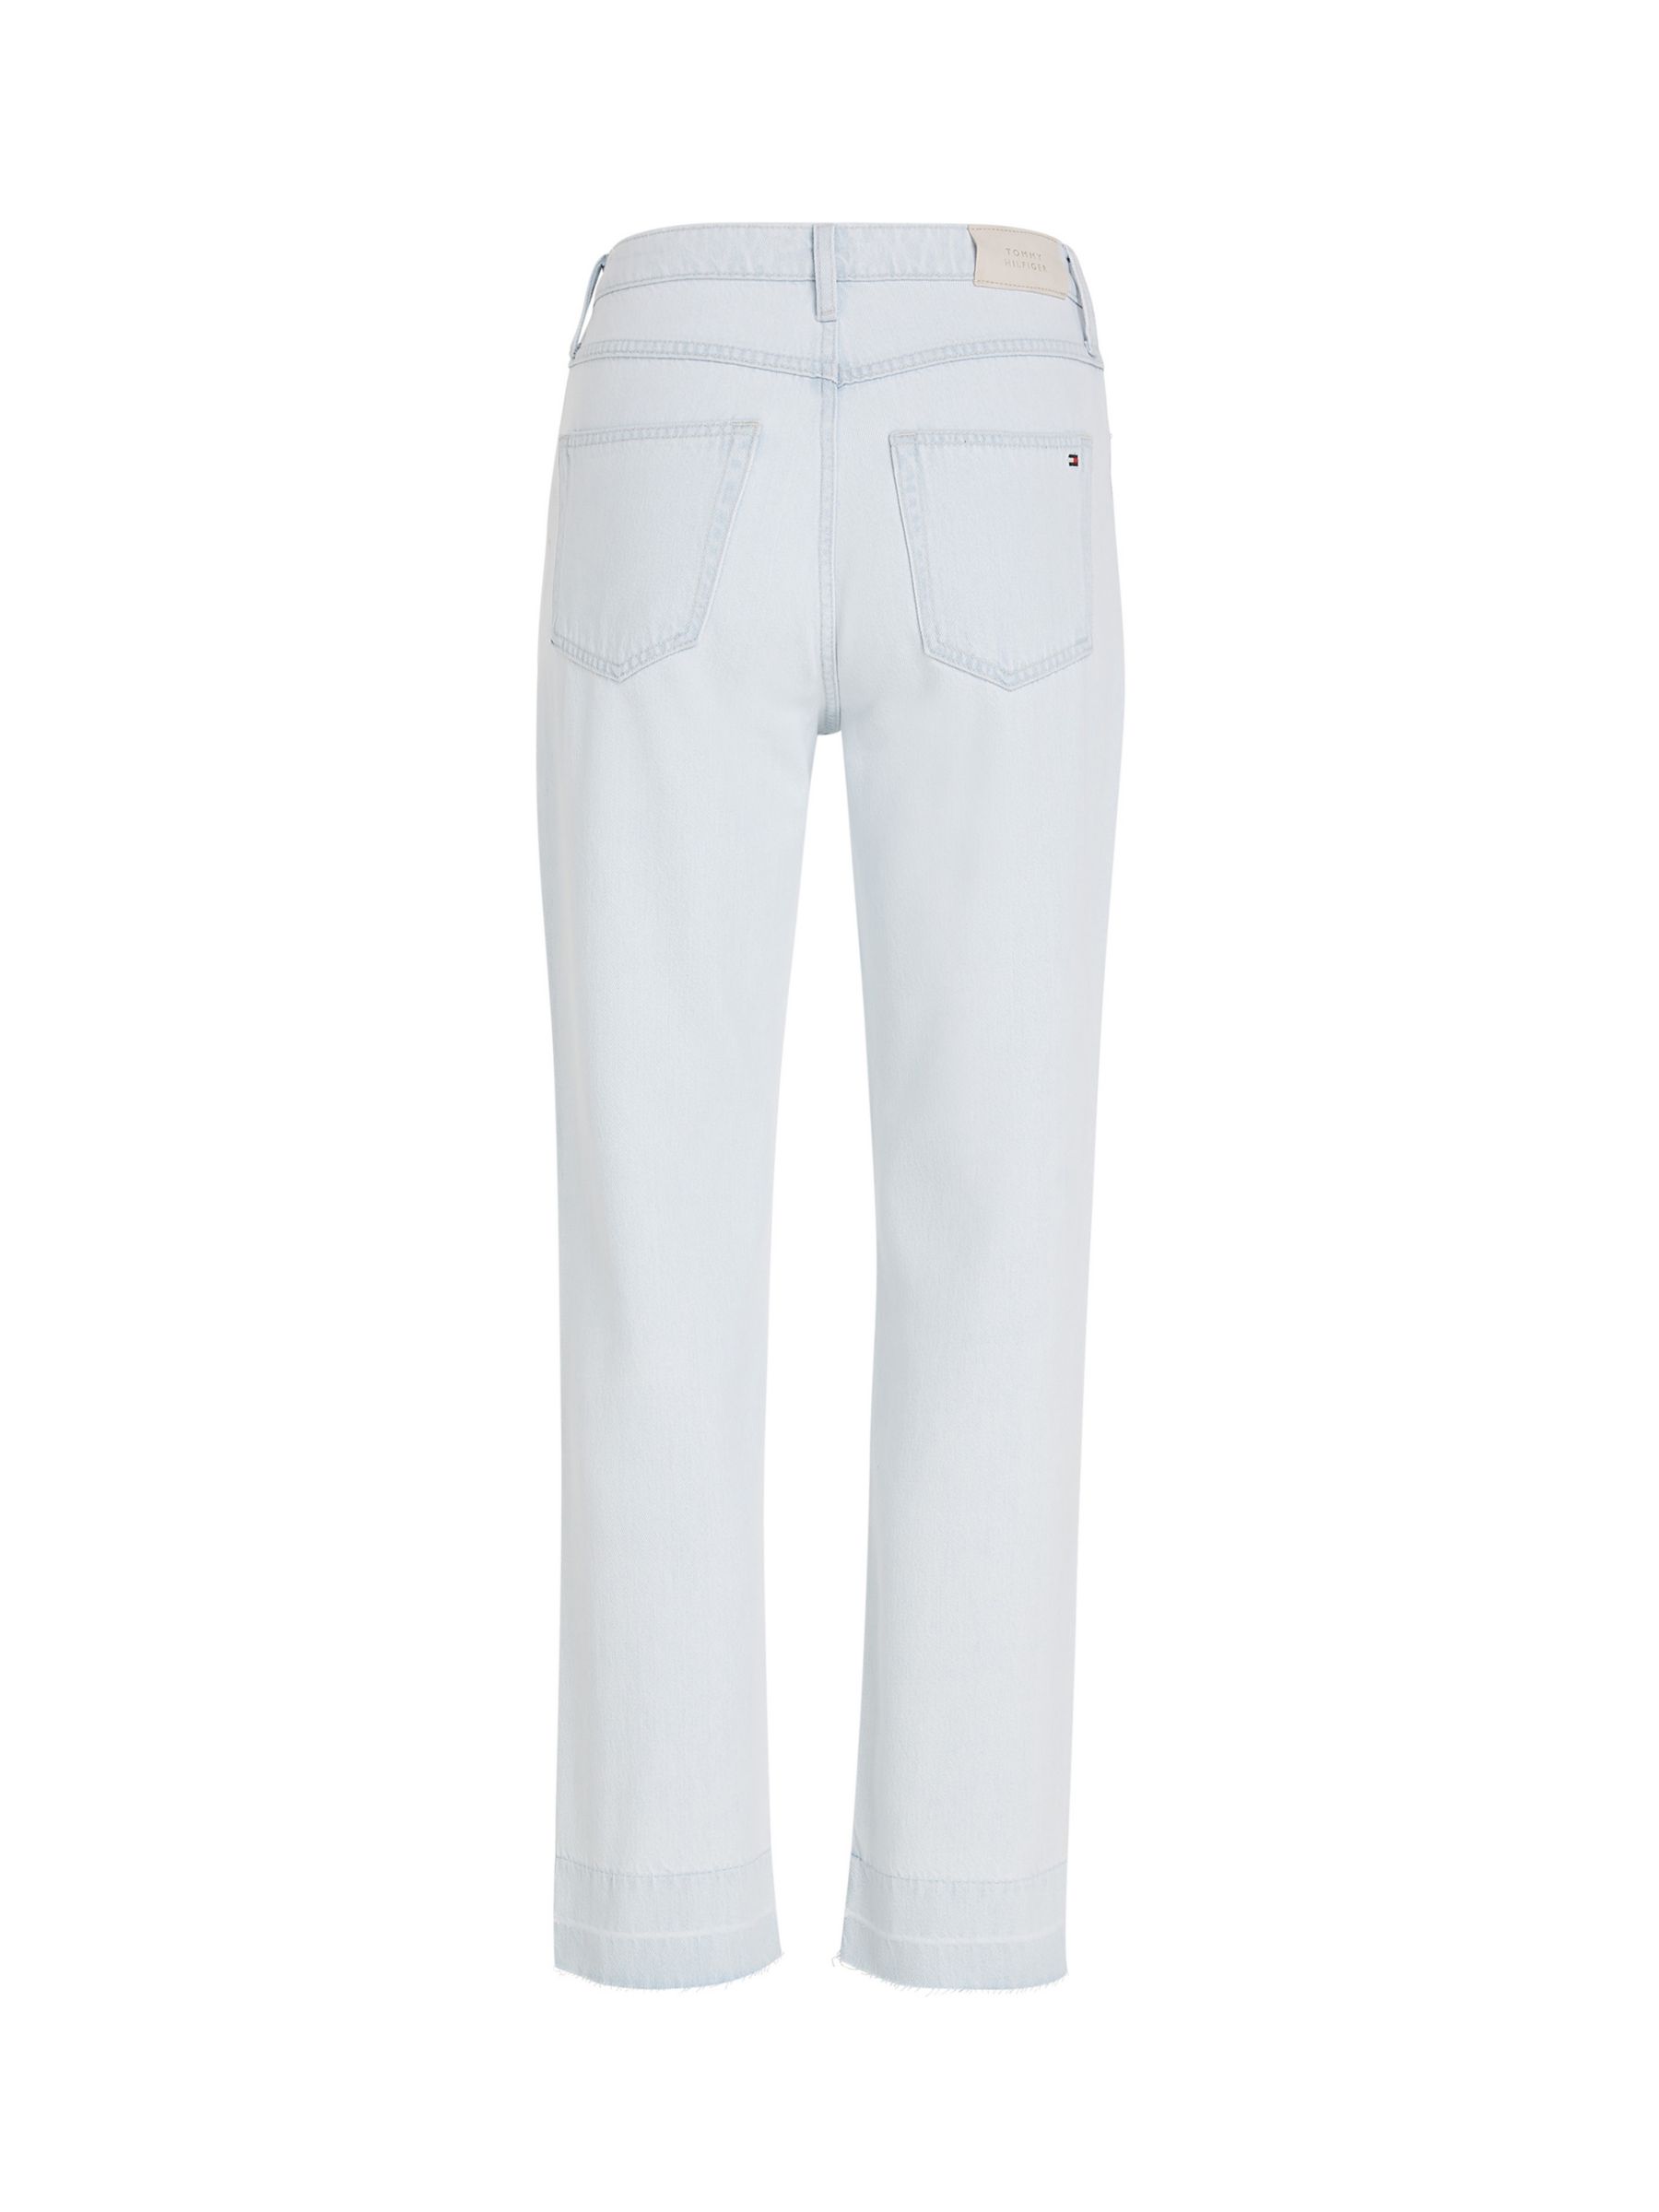 Tommy Hilfiger Women's Kira Straight Jeans, Light Blue, 25S